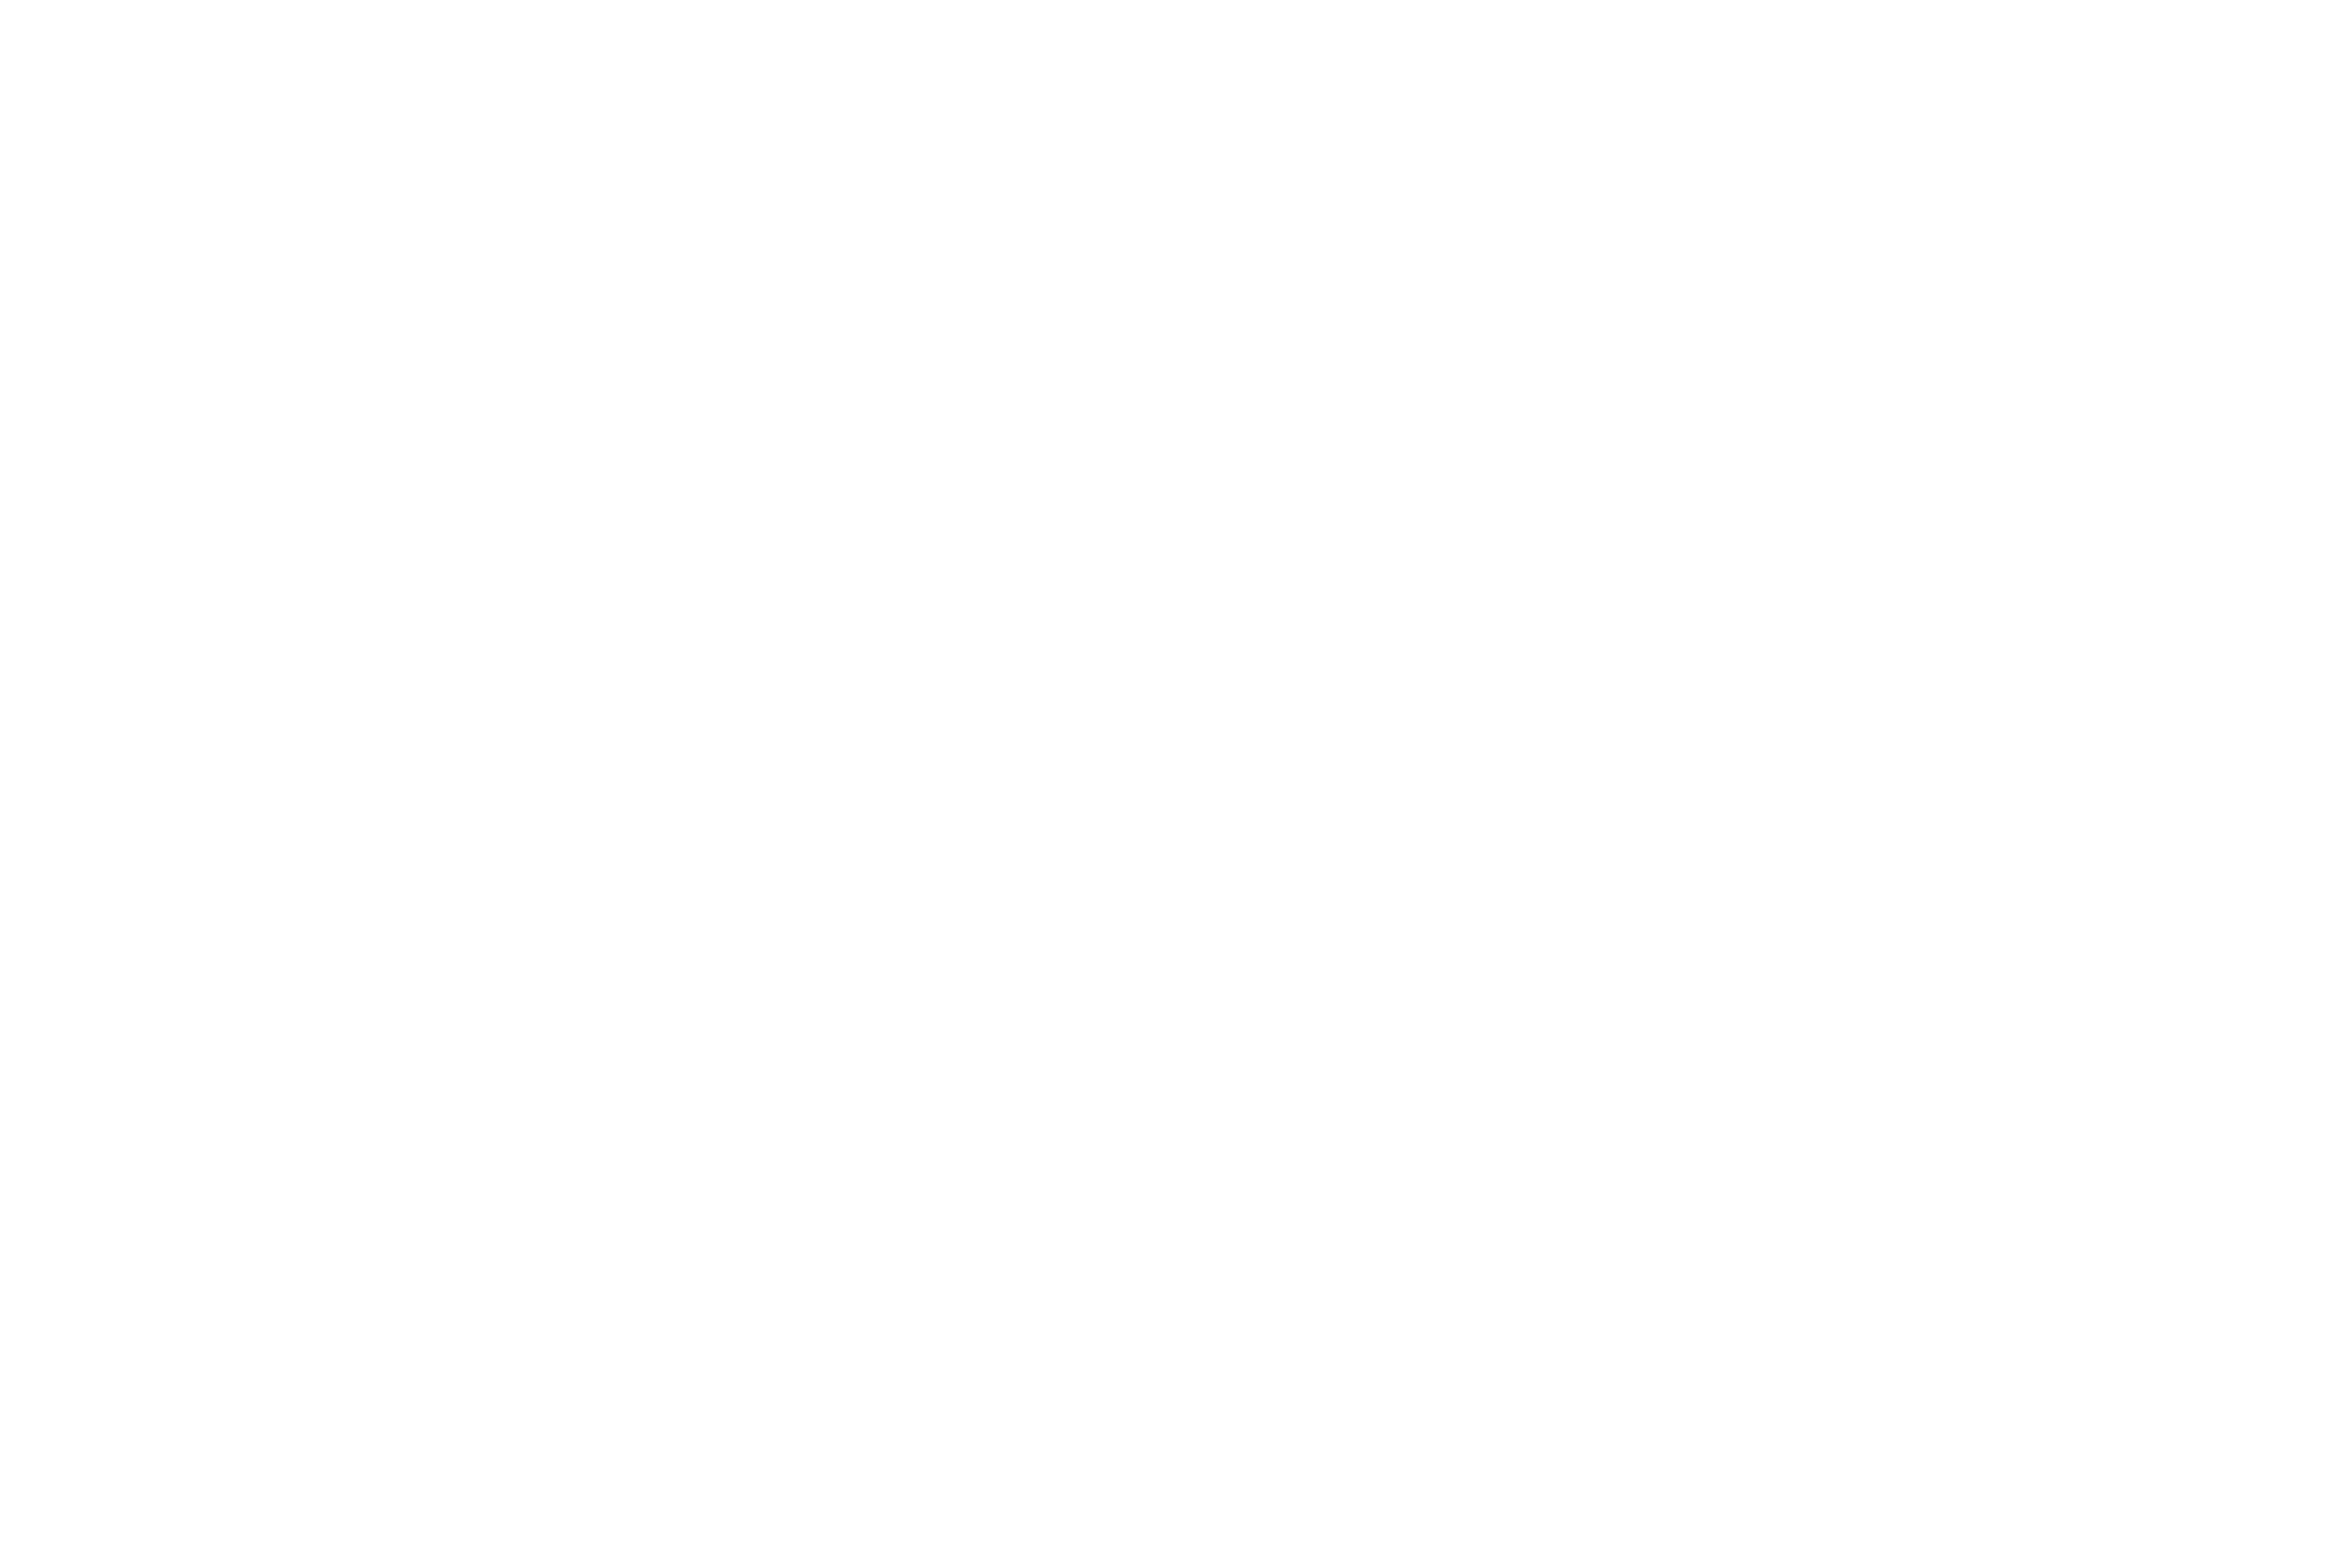 Auto Trader Group logo